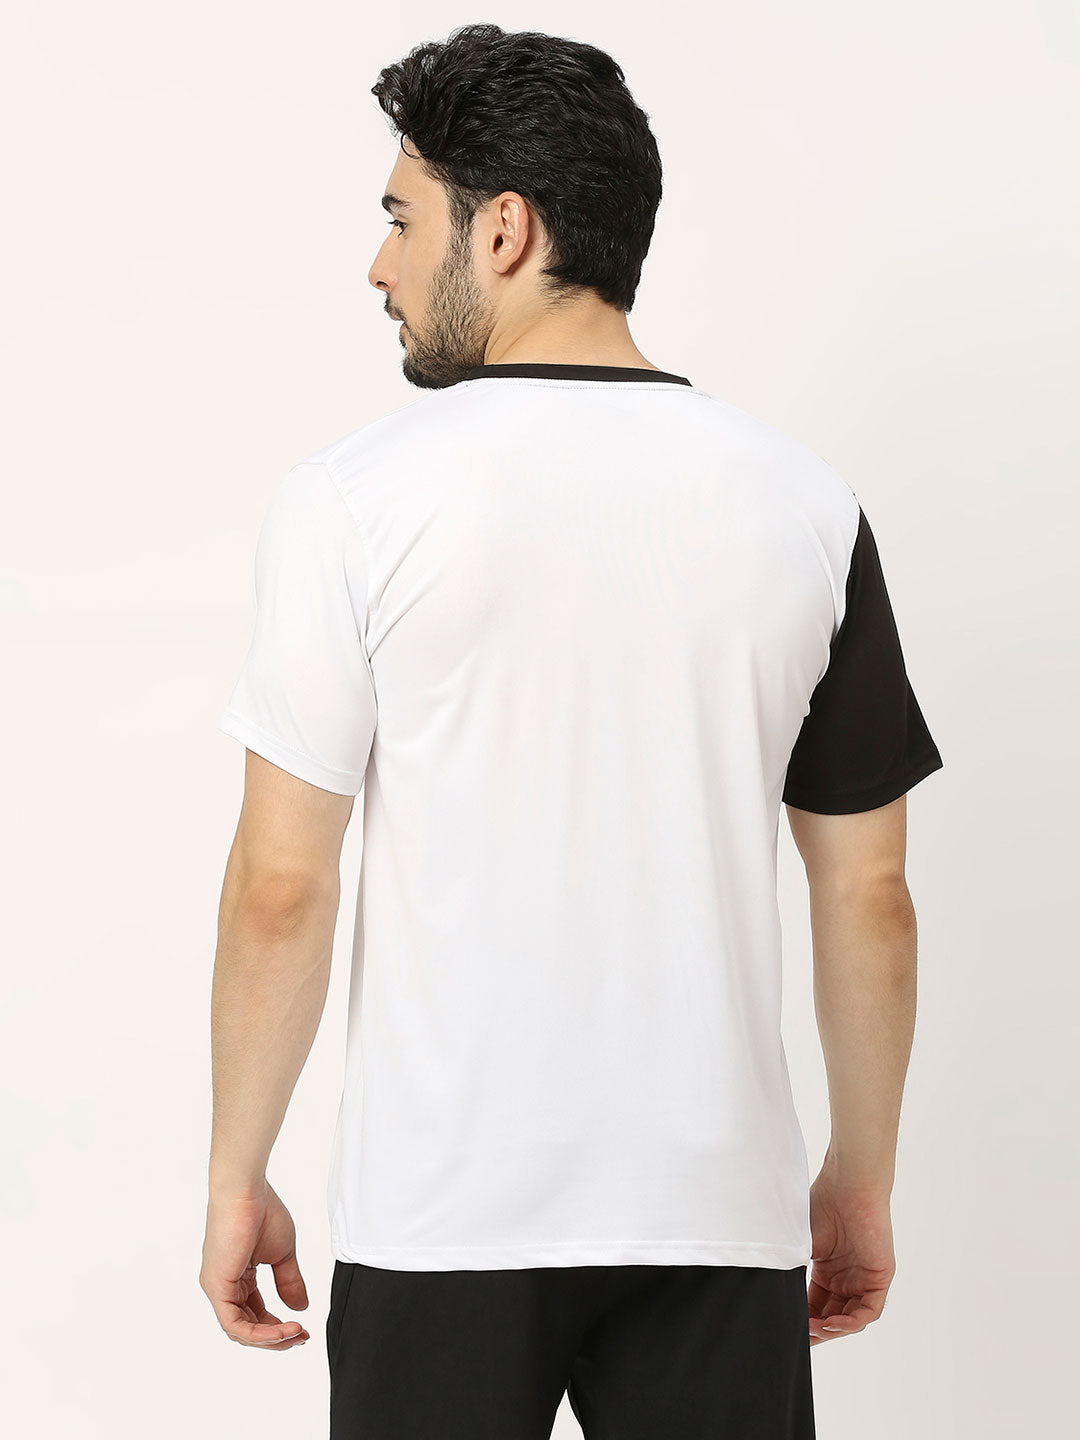 Men's Sports T-Shirt - White and Black